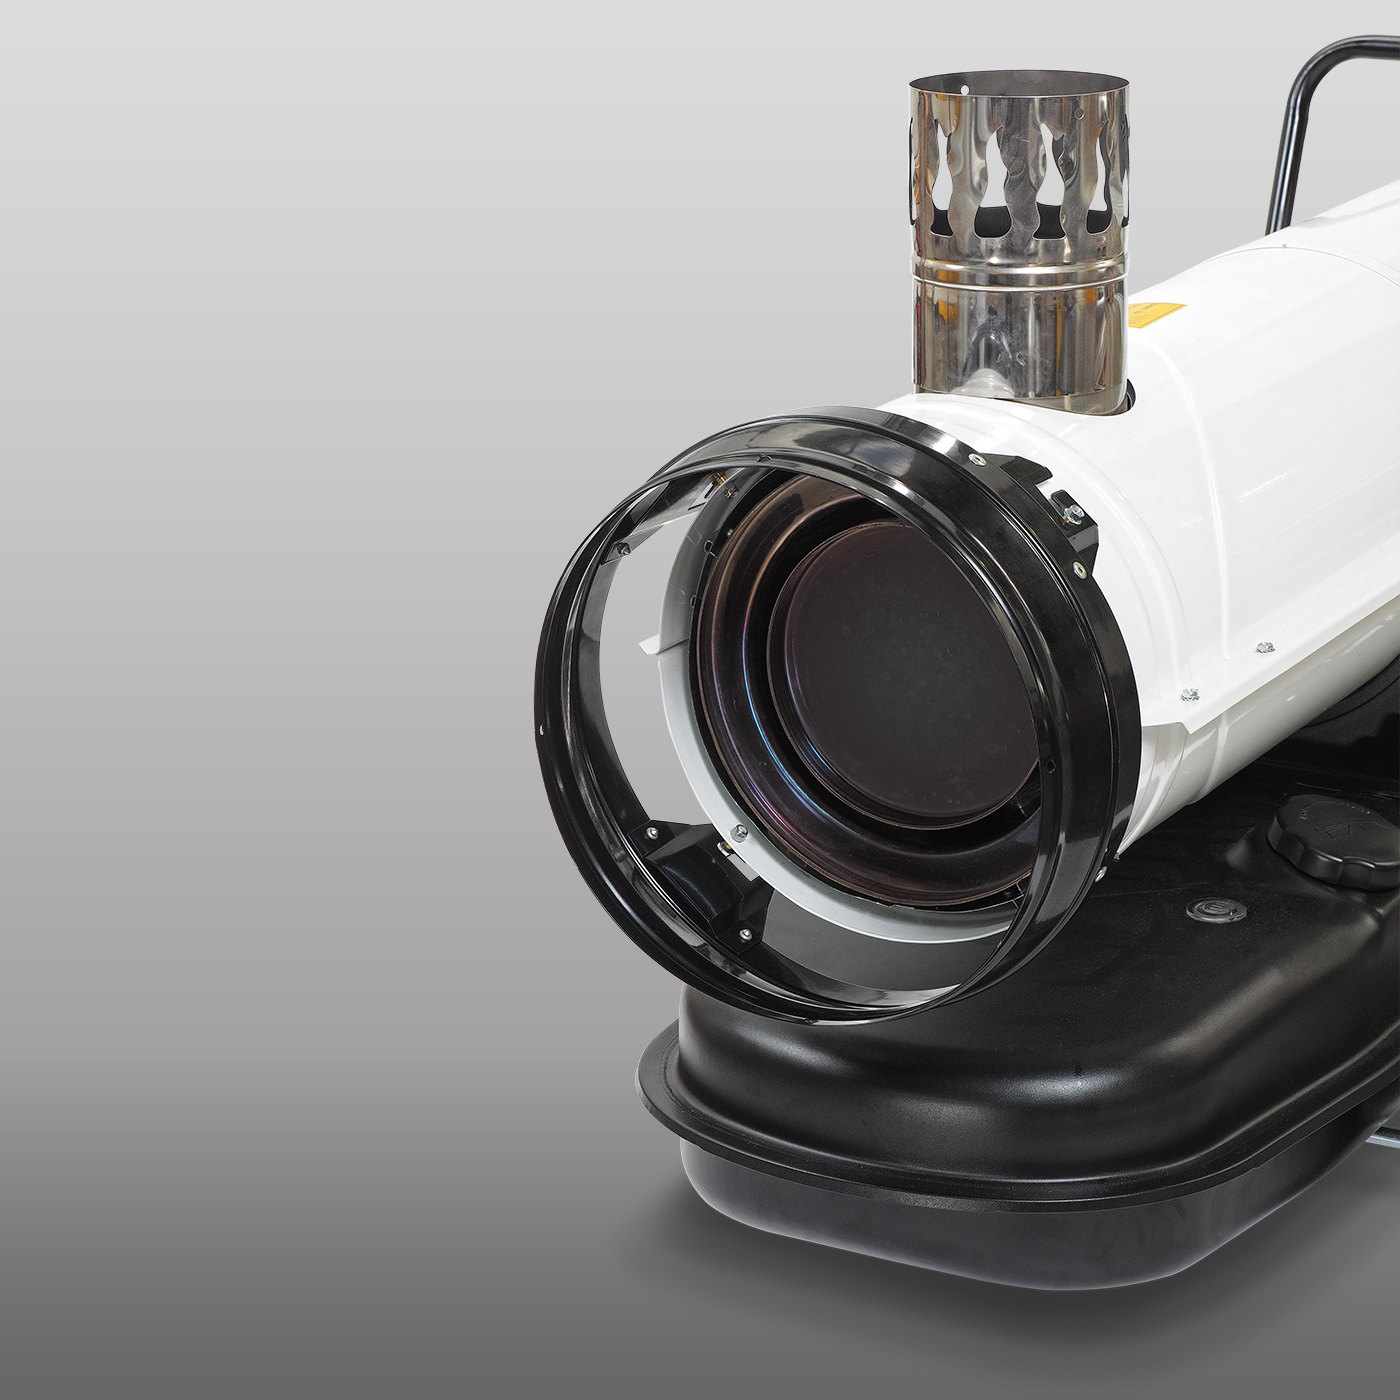 TROTEC Chauffage mobile fioul direct 30 kW IDE 30 D canon à air